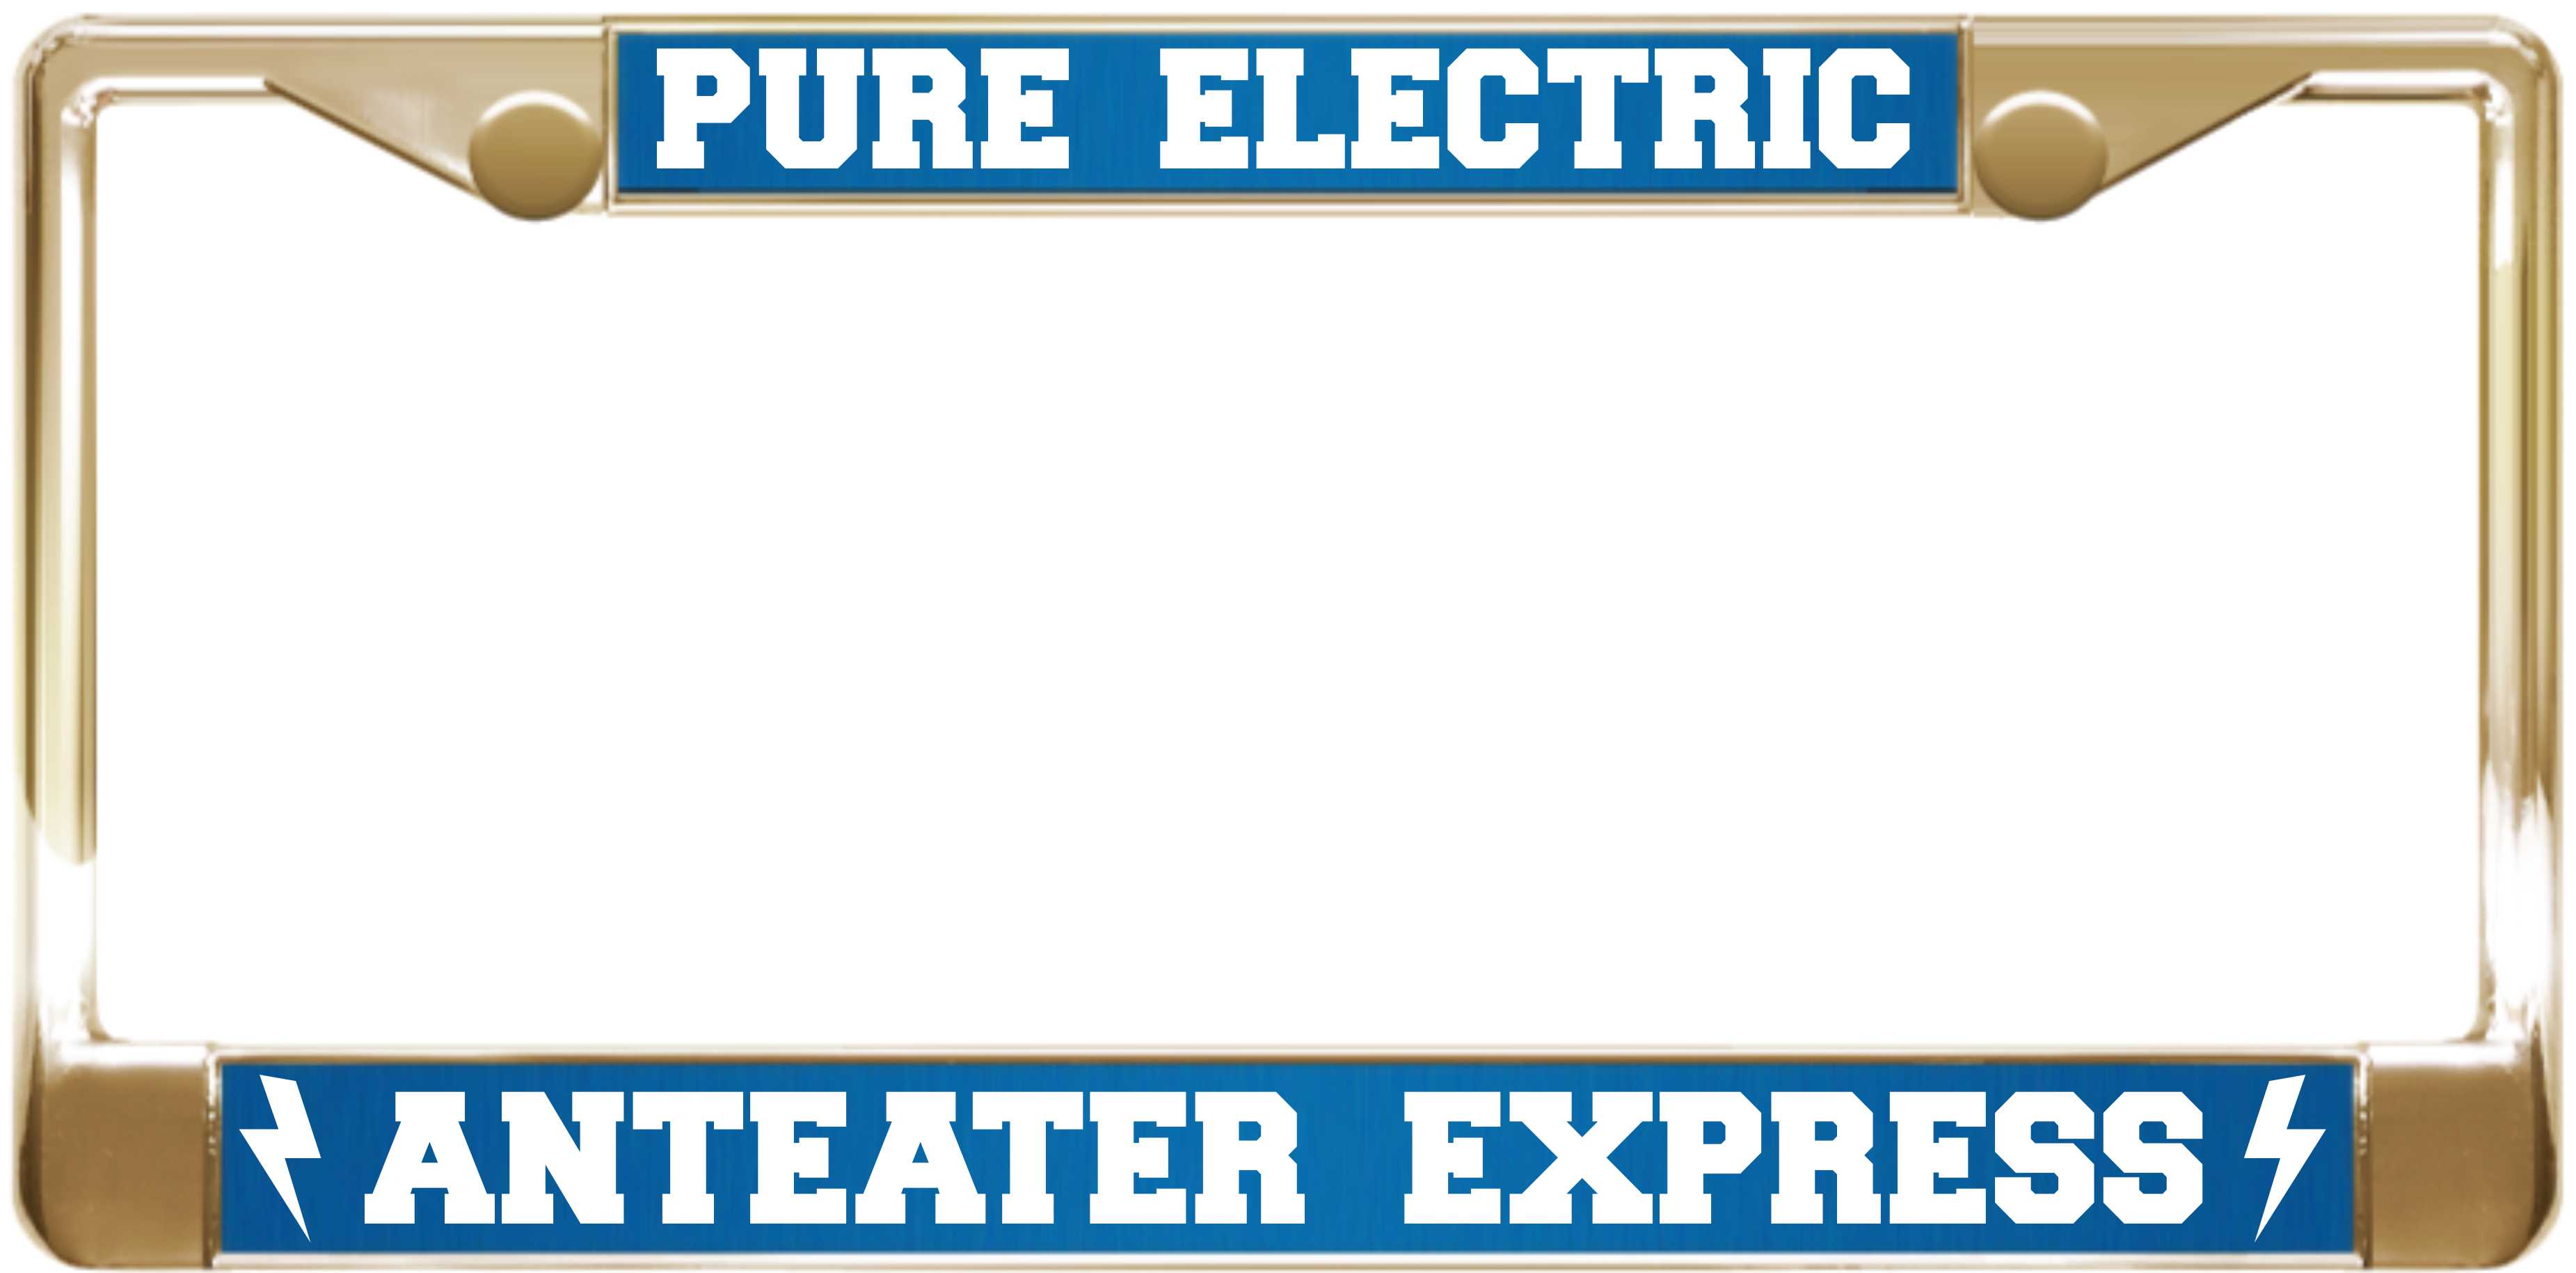 Pure Electric - custom metal license plate frame